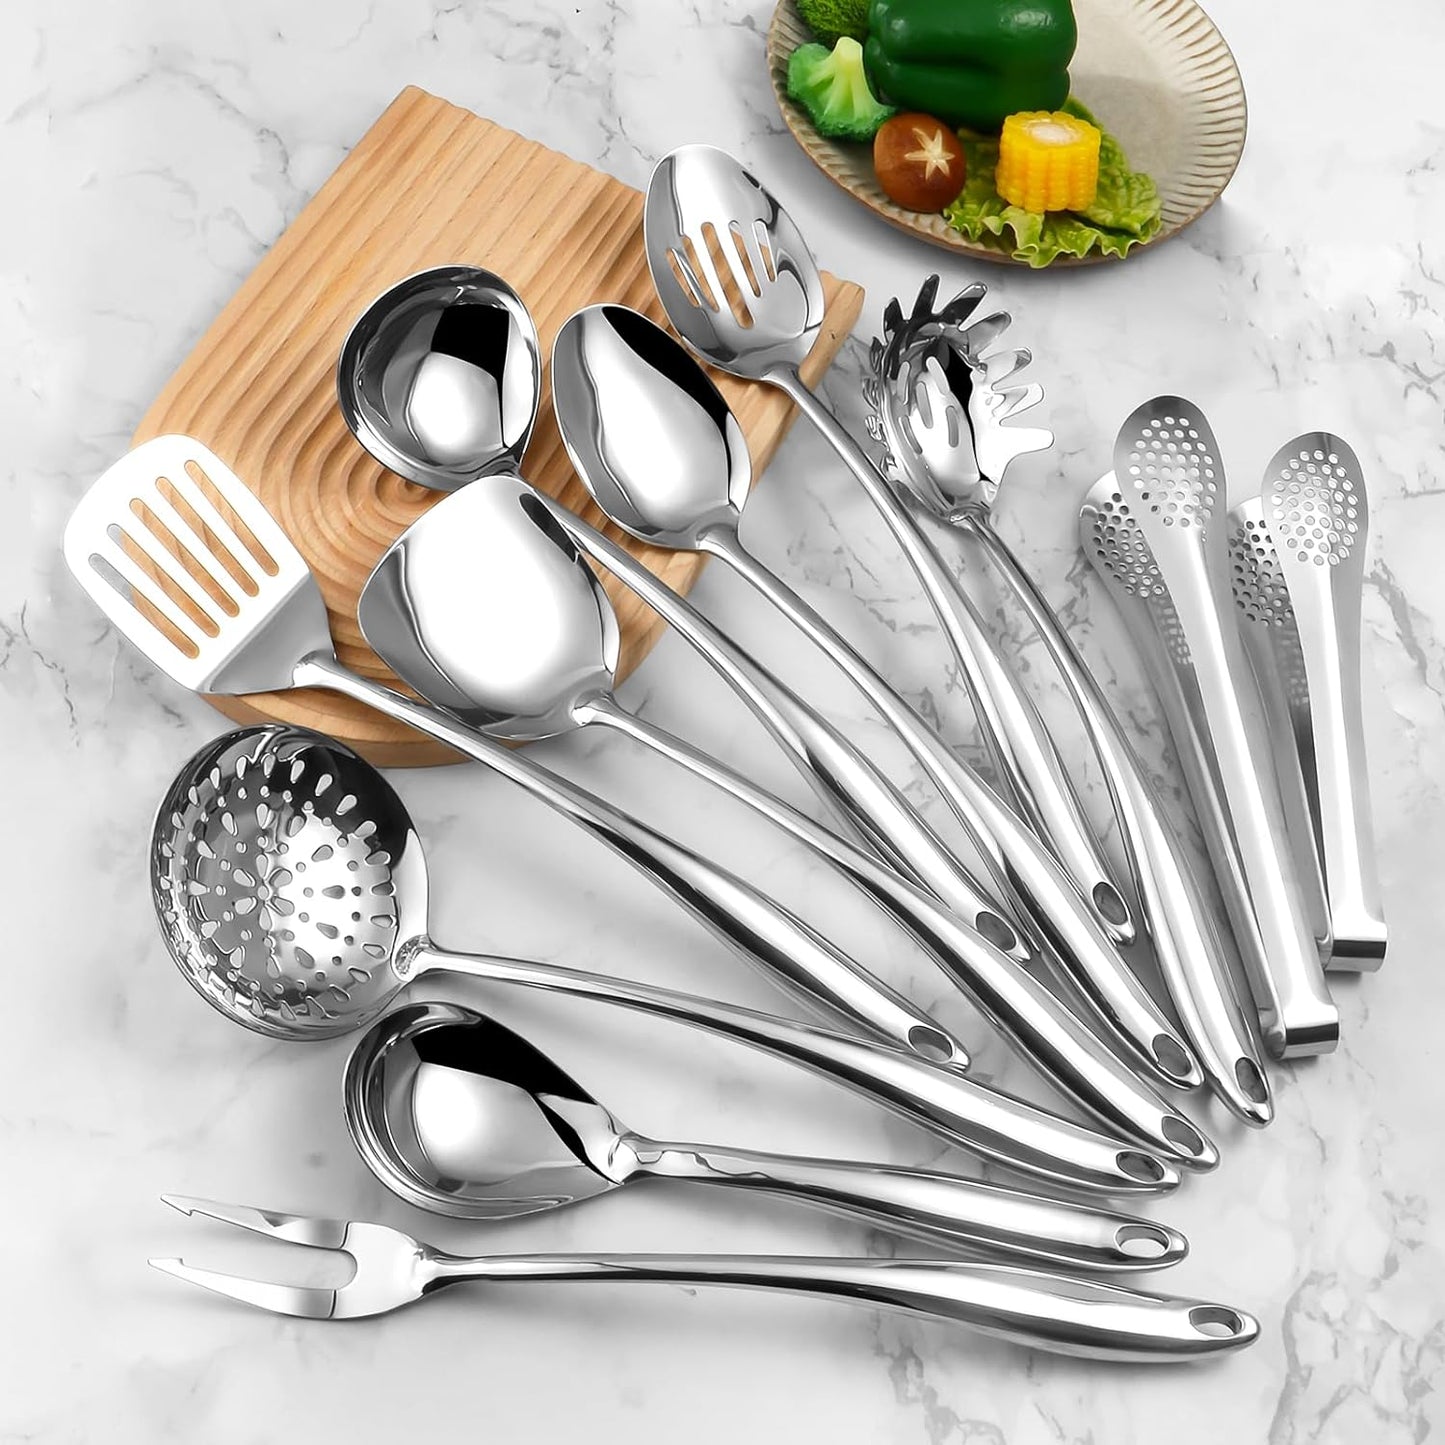 304 Stainlss Steel Kitchen Utensils Set, 11 Pcs Long Metal Cooking Utensil Gadgets Tools Set with Spatula, Spoon, Ladle, Skimmer, Tunner, Pasta Server, Tongs(Mirror Polished, Dishwasher Safe)